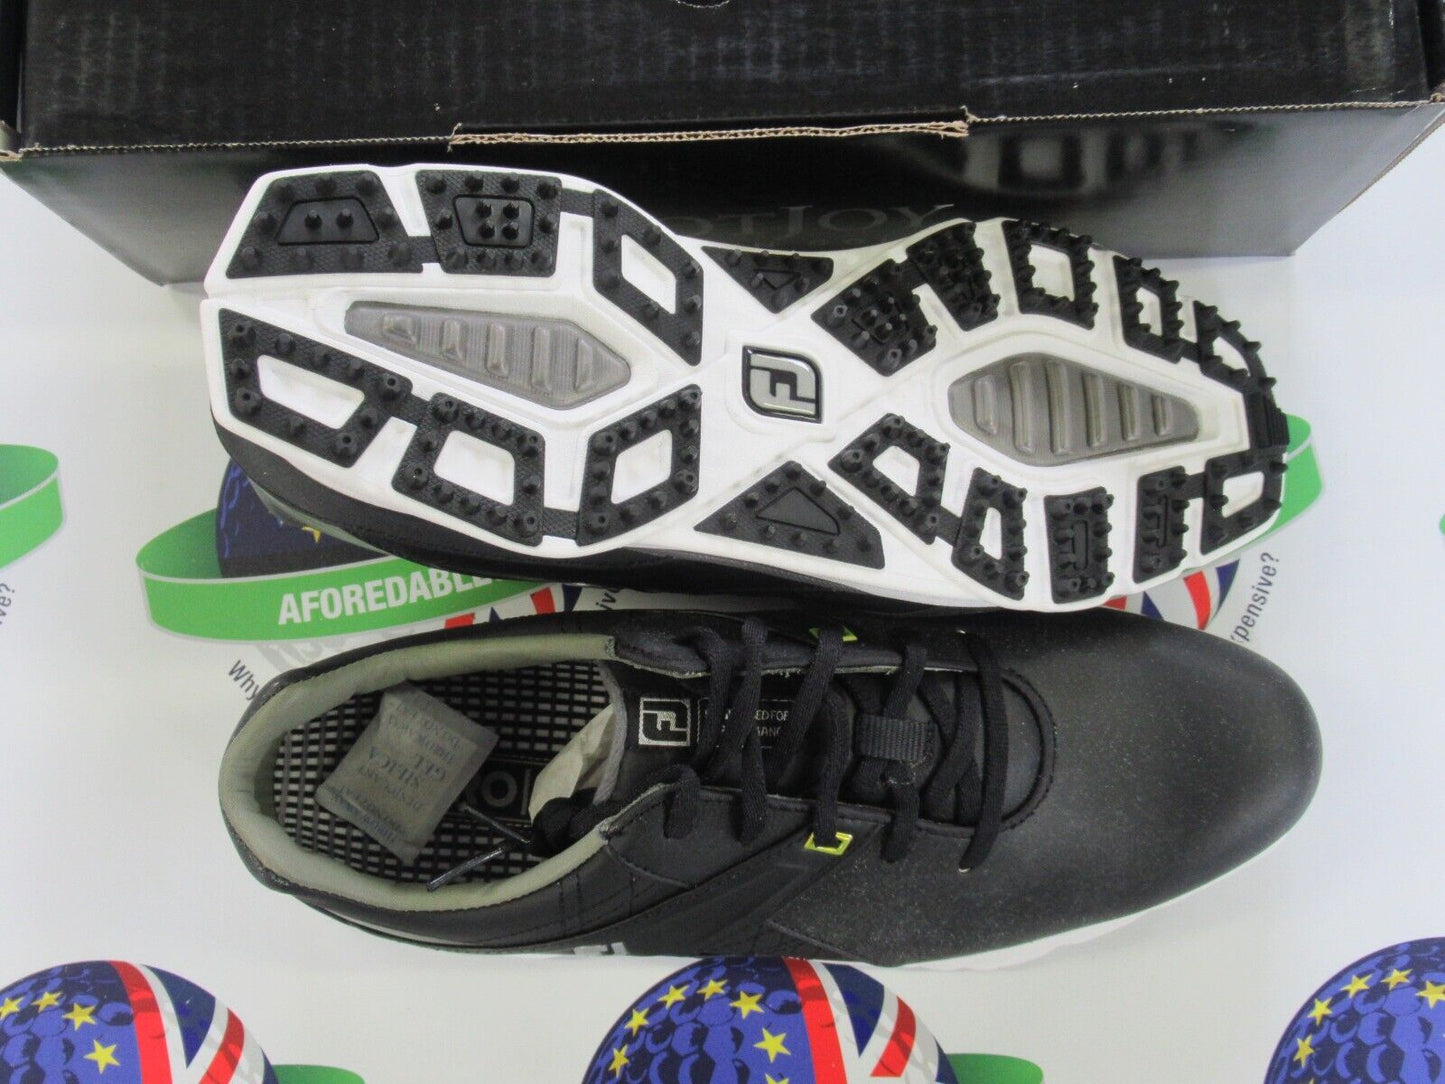 footjoy pro sl waterproof golf shoes 53813k black uk size 8.5 medium